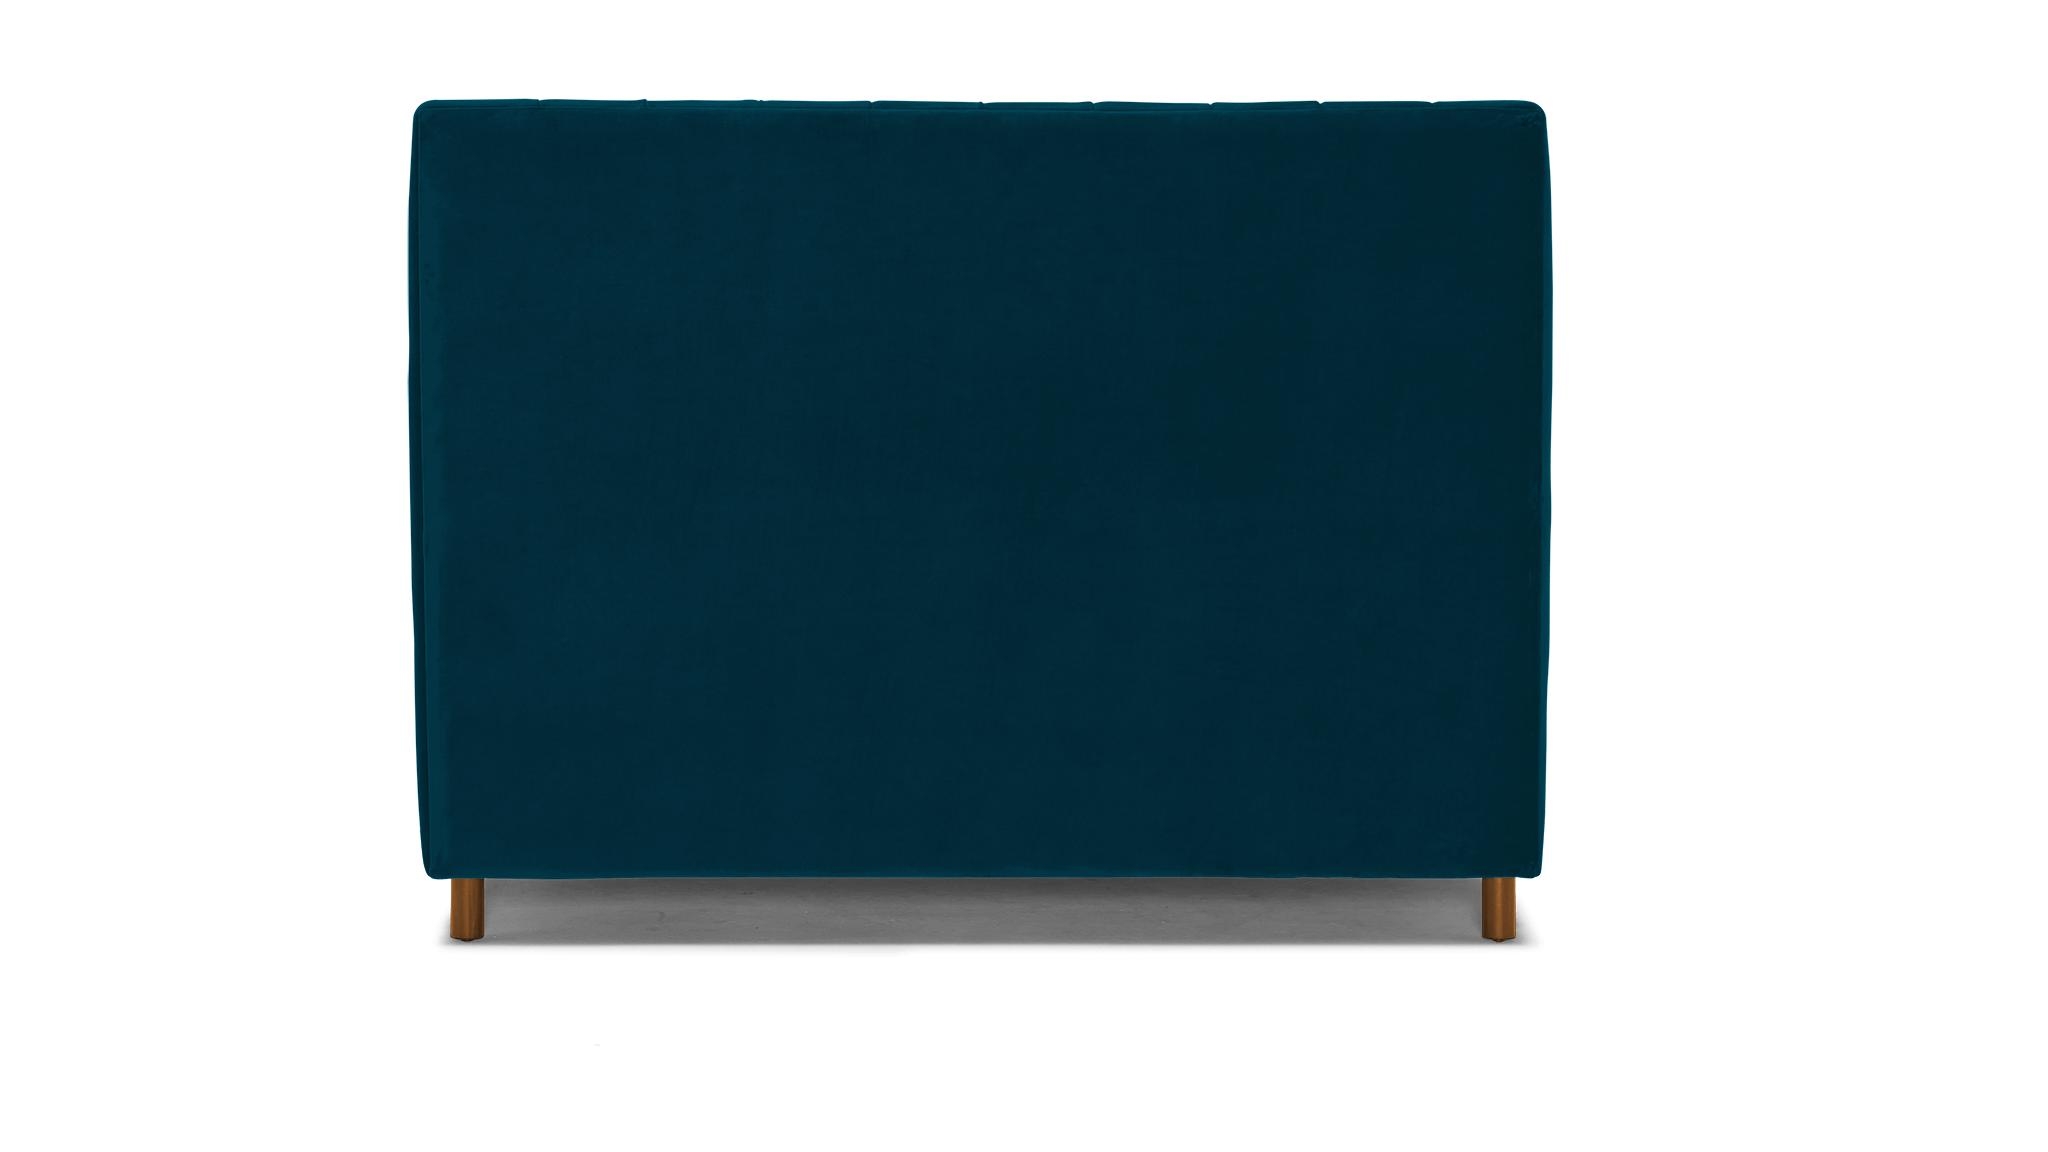 Blue Lotta Mid Century Modern Bed - Key Largo Zenith Teal - Mocha - Cal King - Image 4